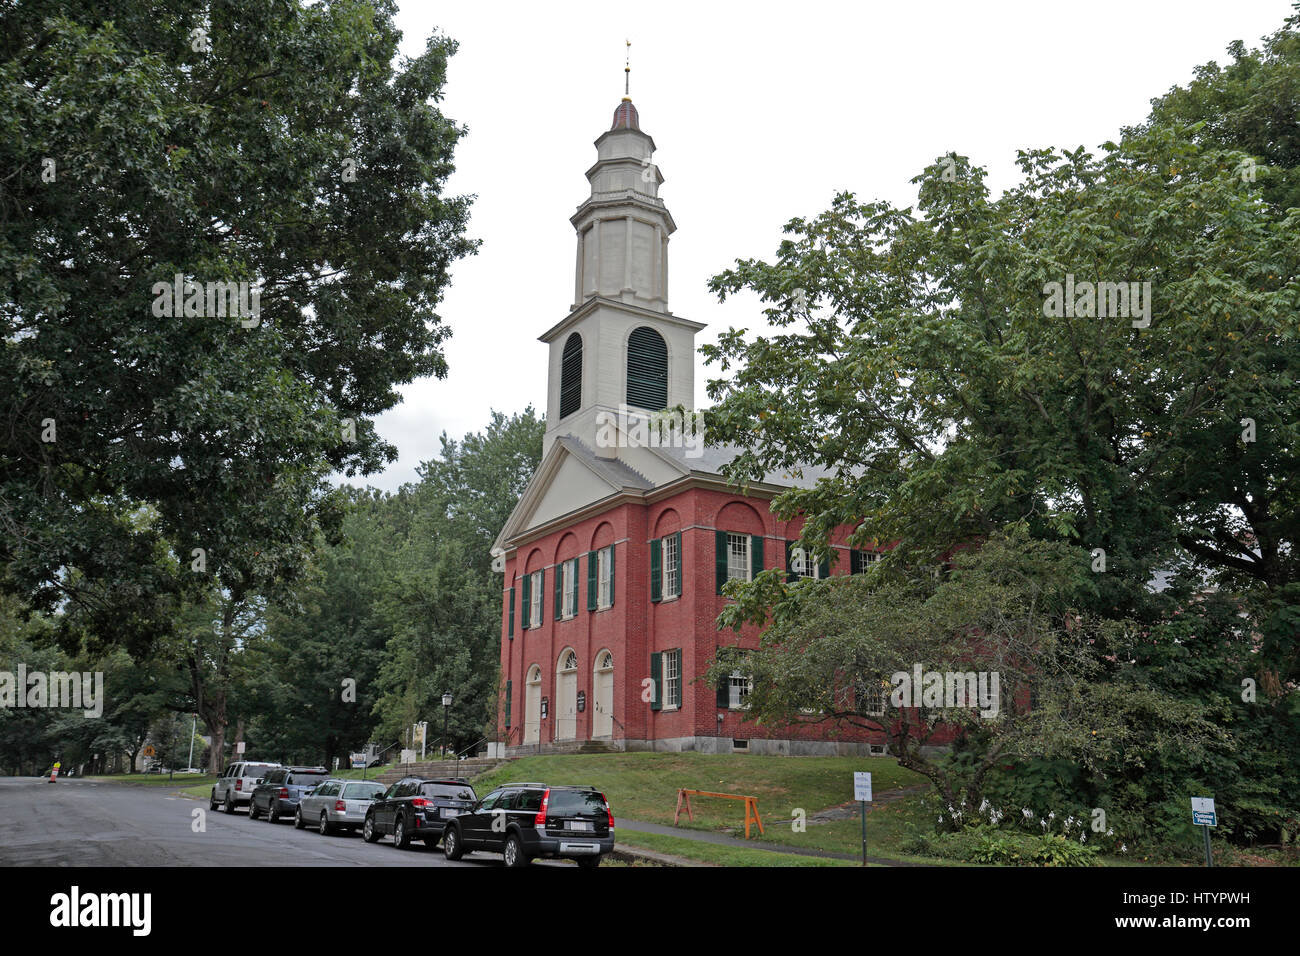 La prima chiesa di Deerfield nella storica città di Deerfield, contea di Franklin, Massachusetts, Stati Uniti. Foto Stock